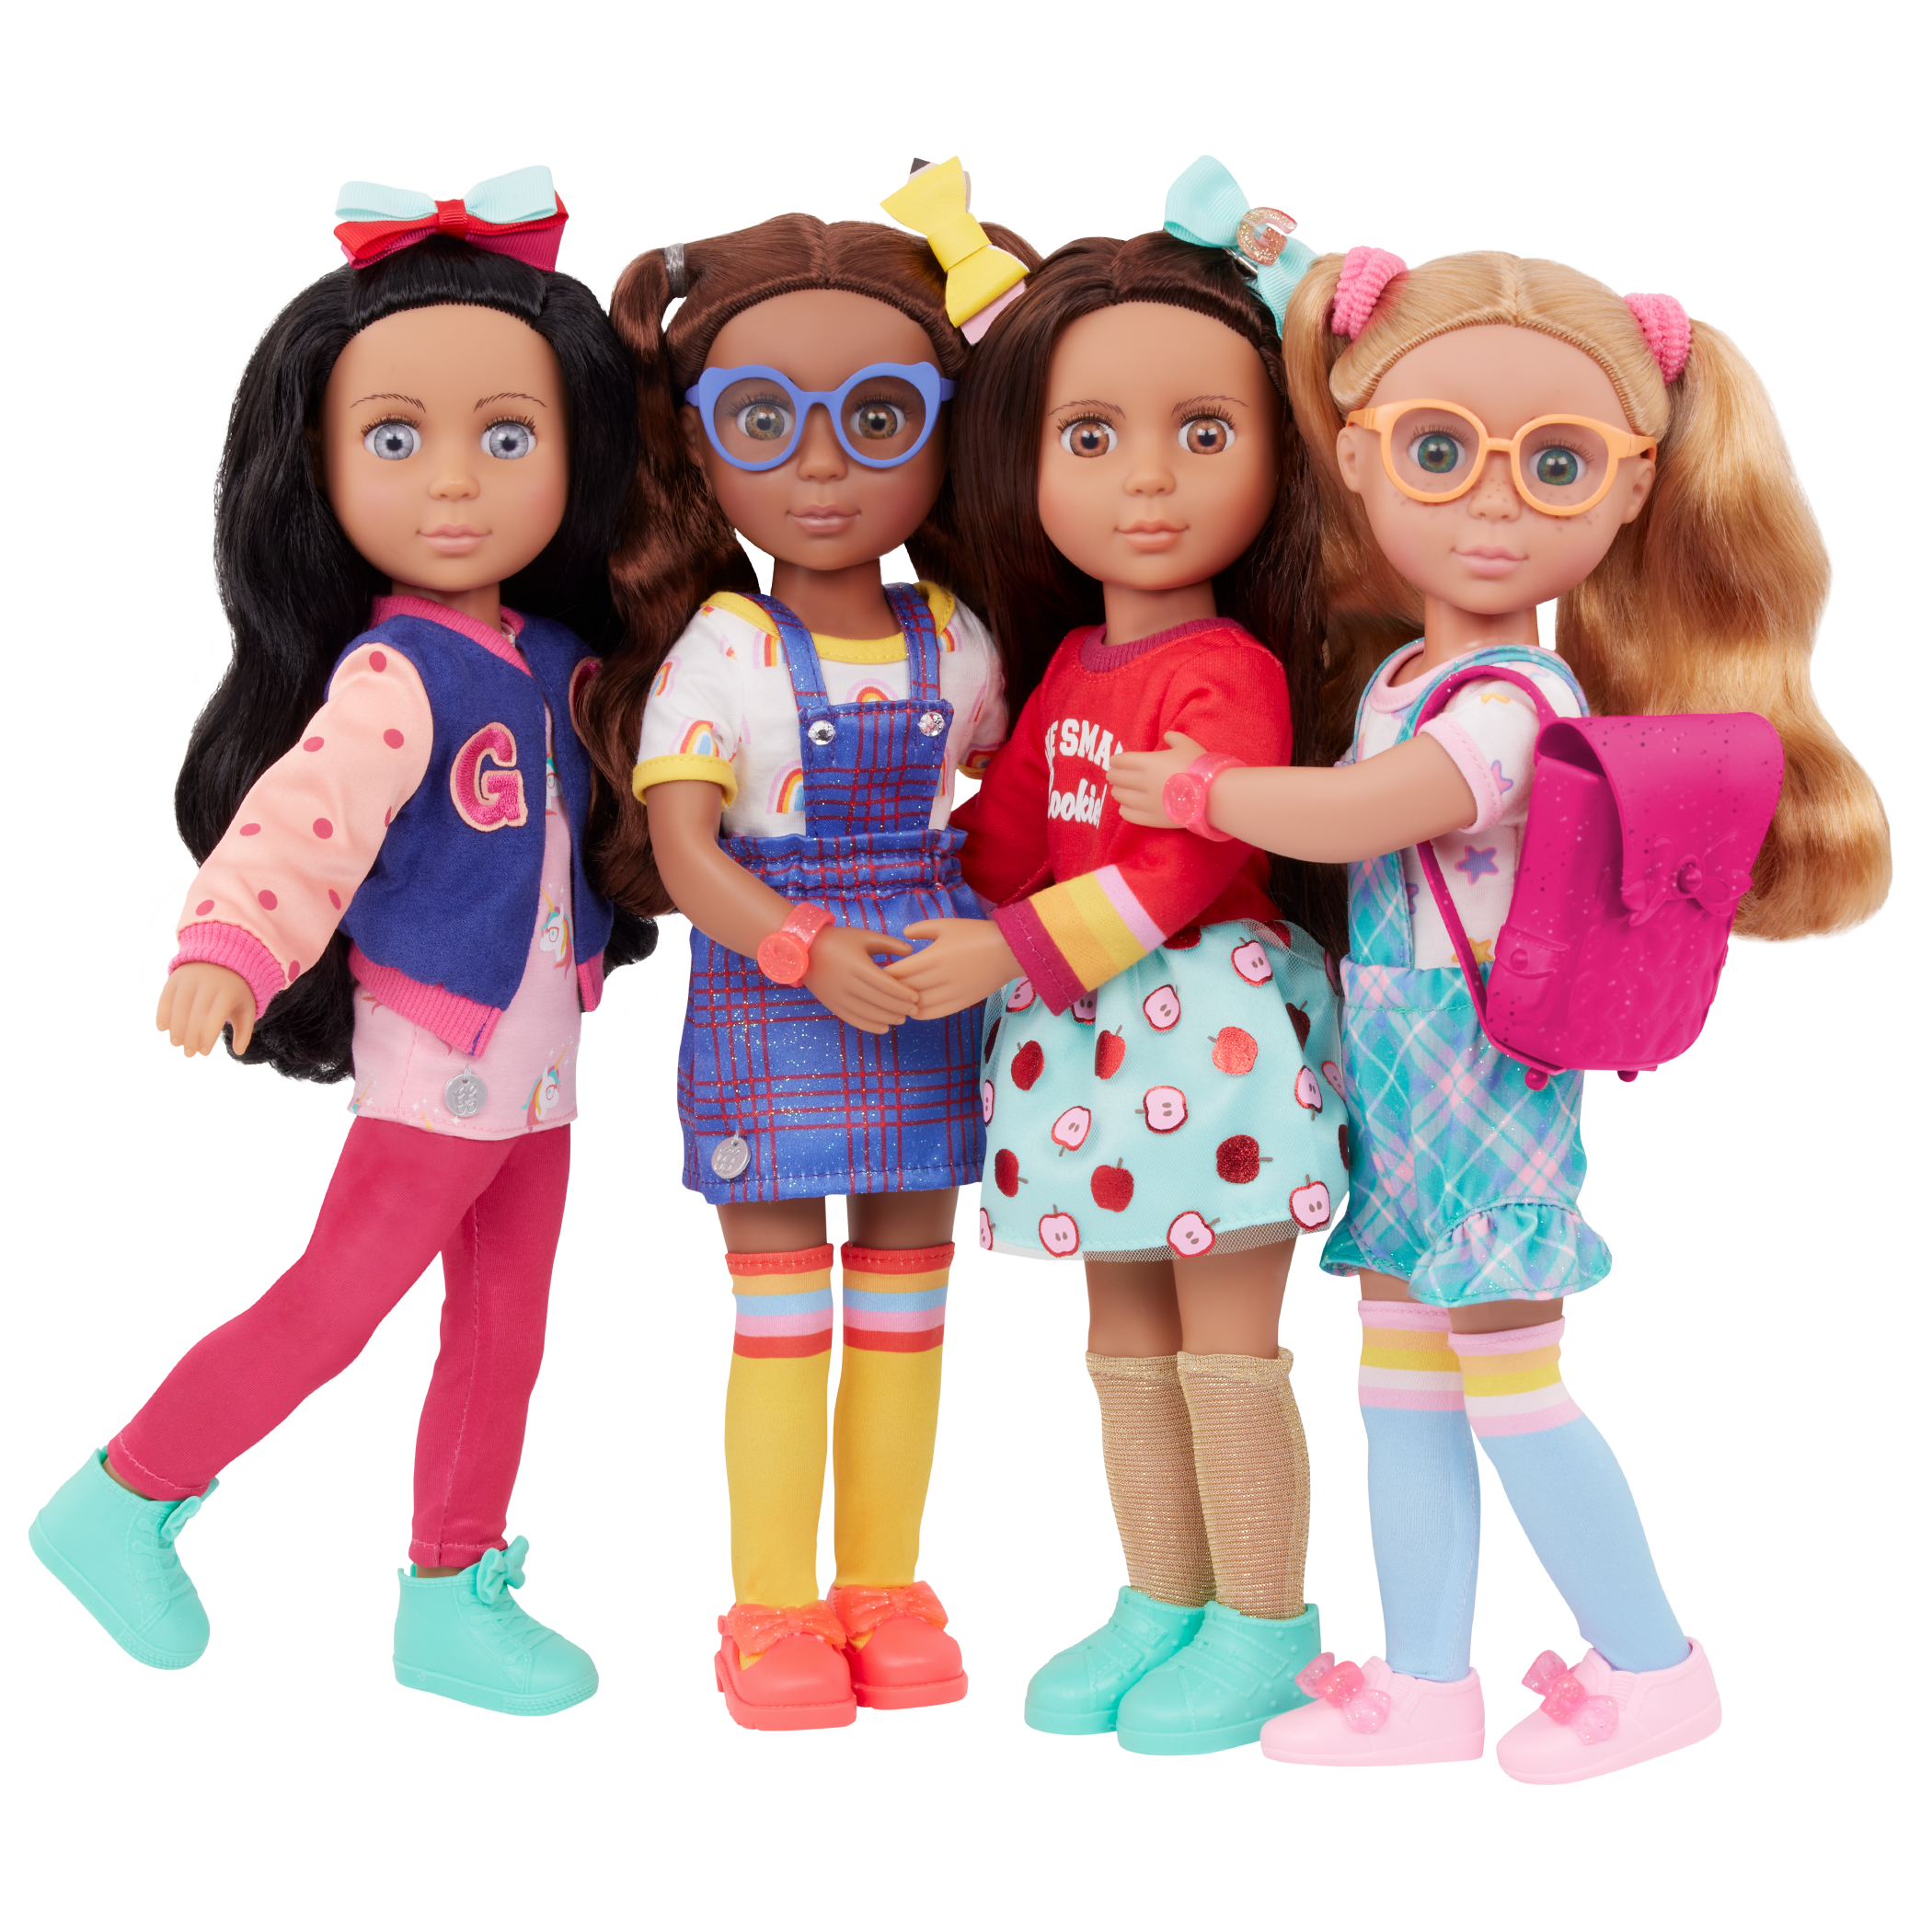 Glitter Girls glitter girls - 14-inch fashion doll - green eyes & blonde  hair - backpack, glasses, & school accessories - plaid overalls 